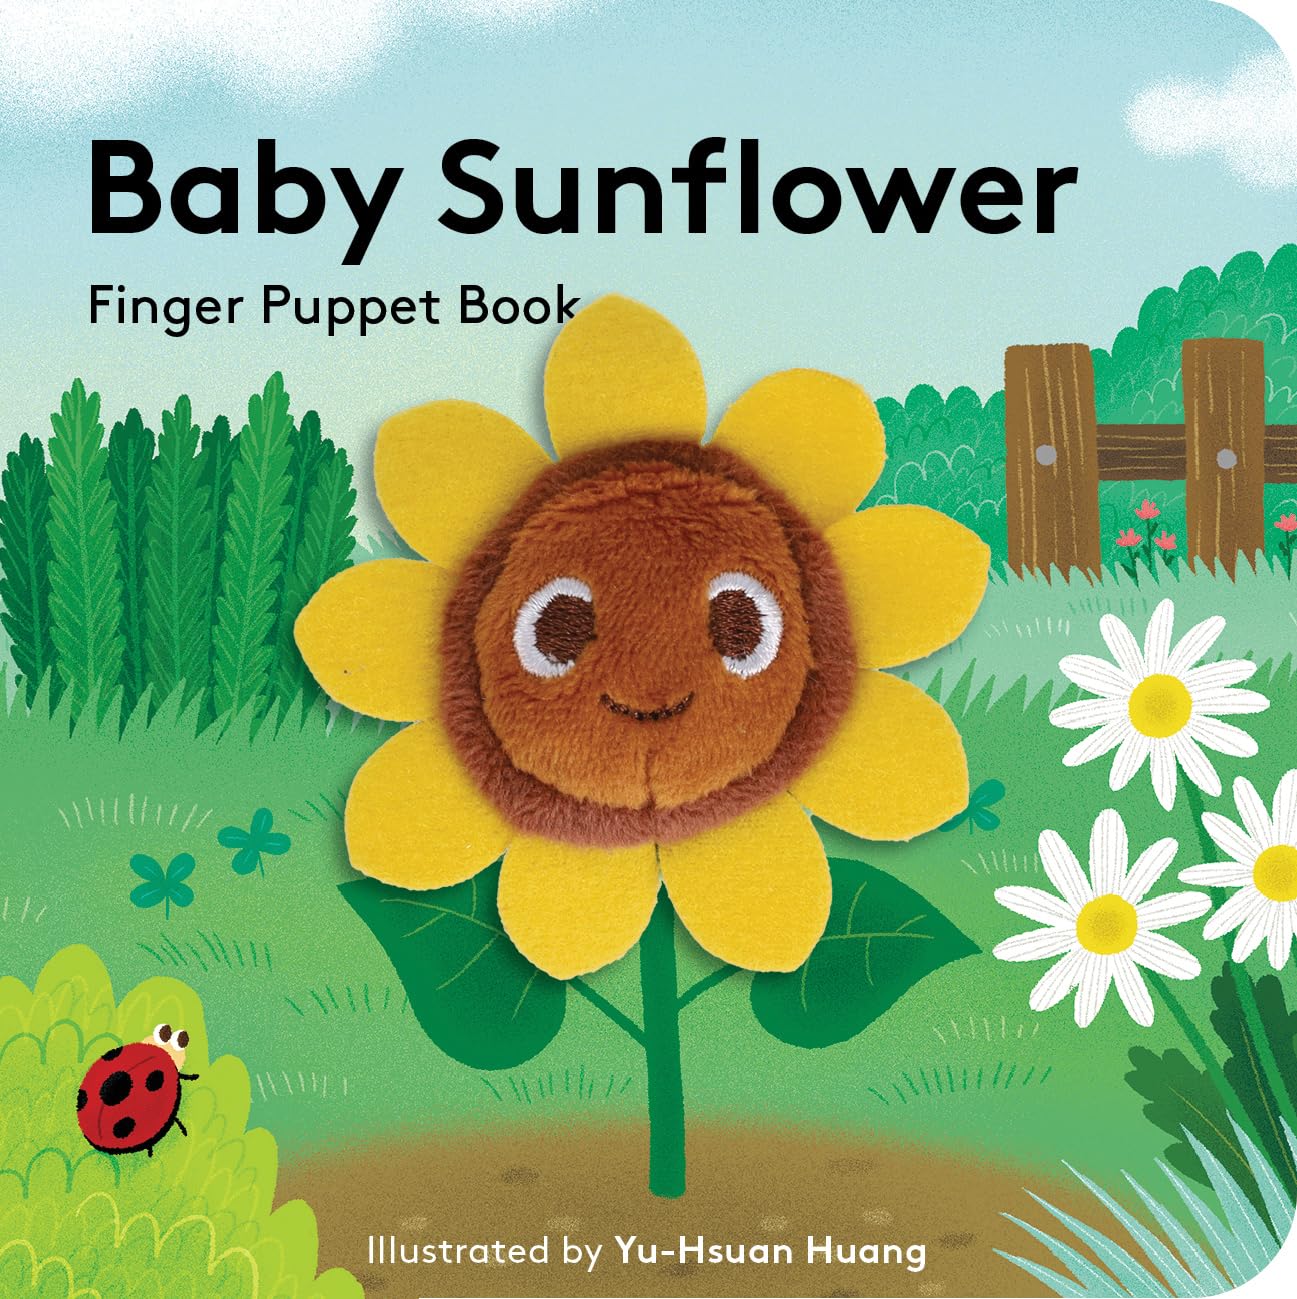 "Baby Sunflower" Finger Puppet Book